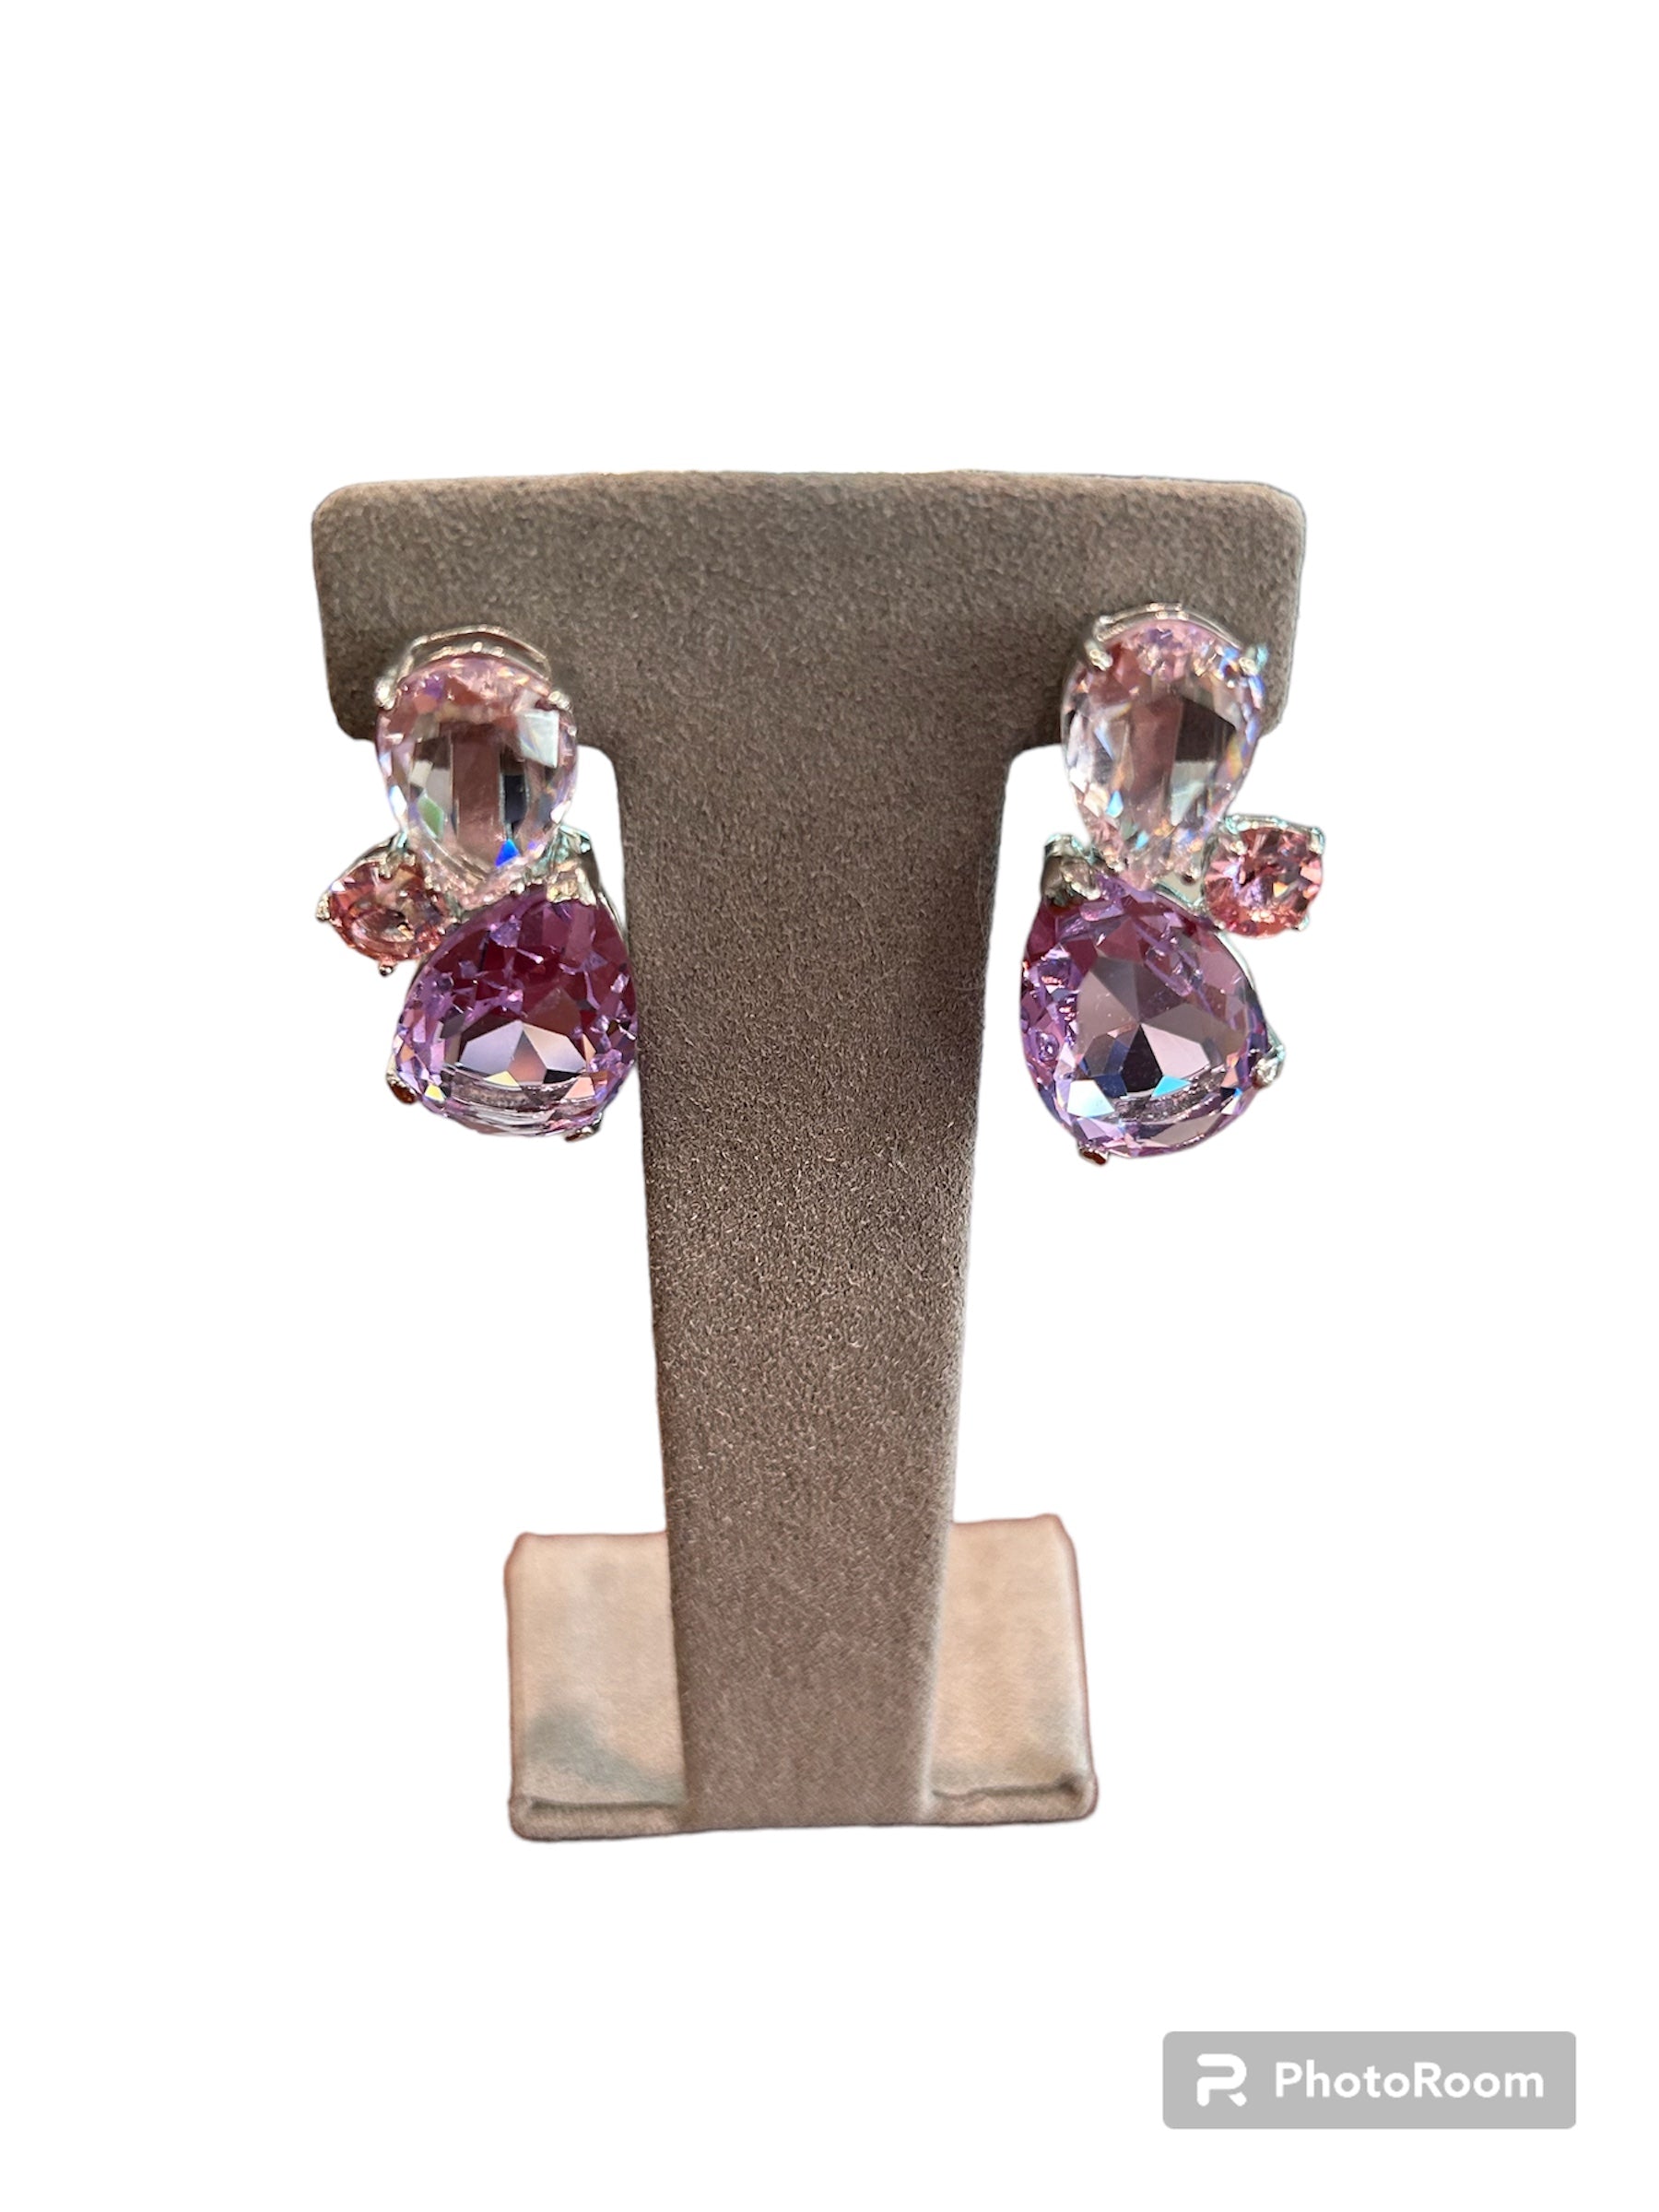 IL Mio Re - Earrings in gilded bronze and purple stones - ILMIORE OR 092